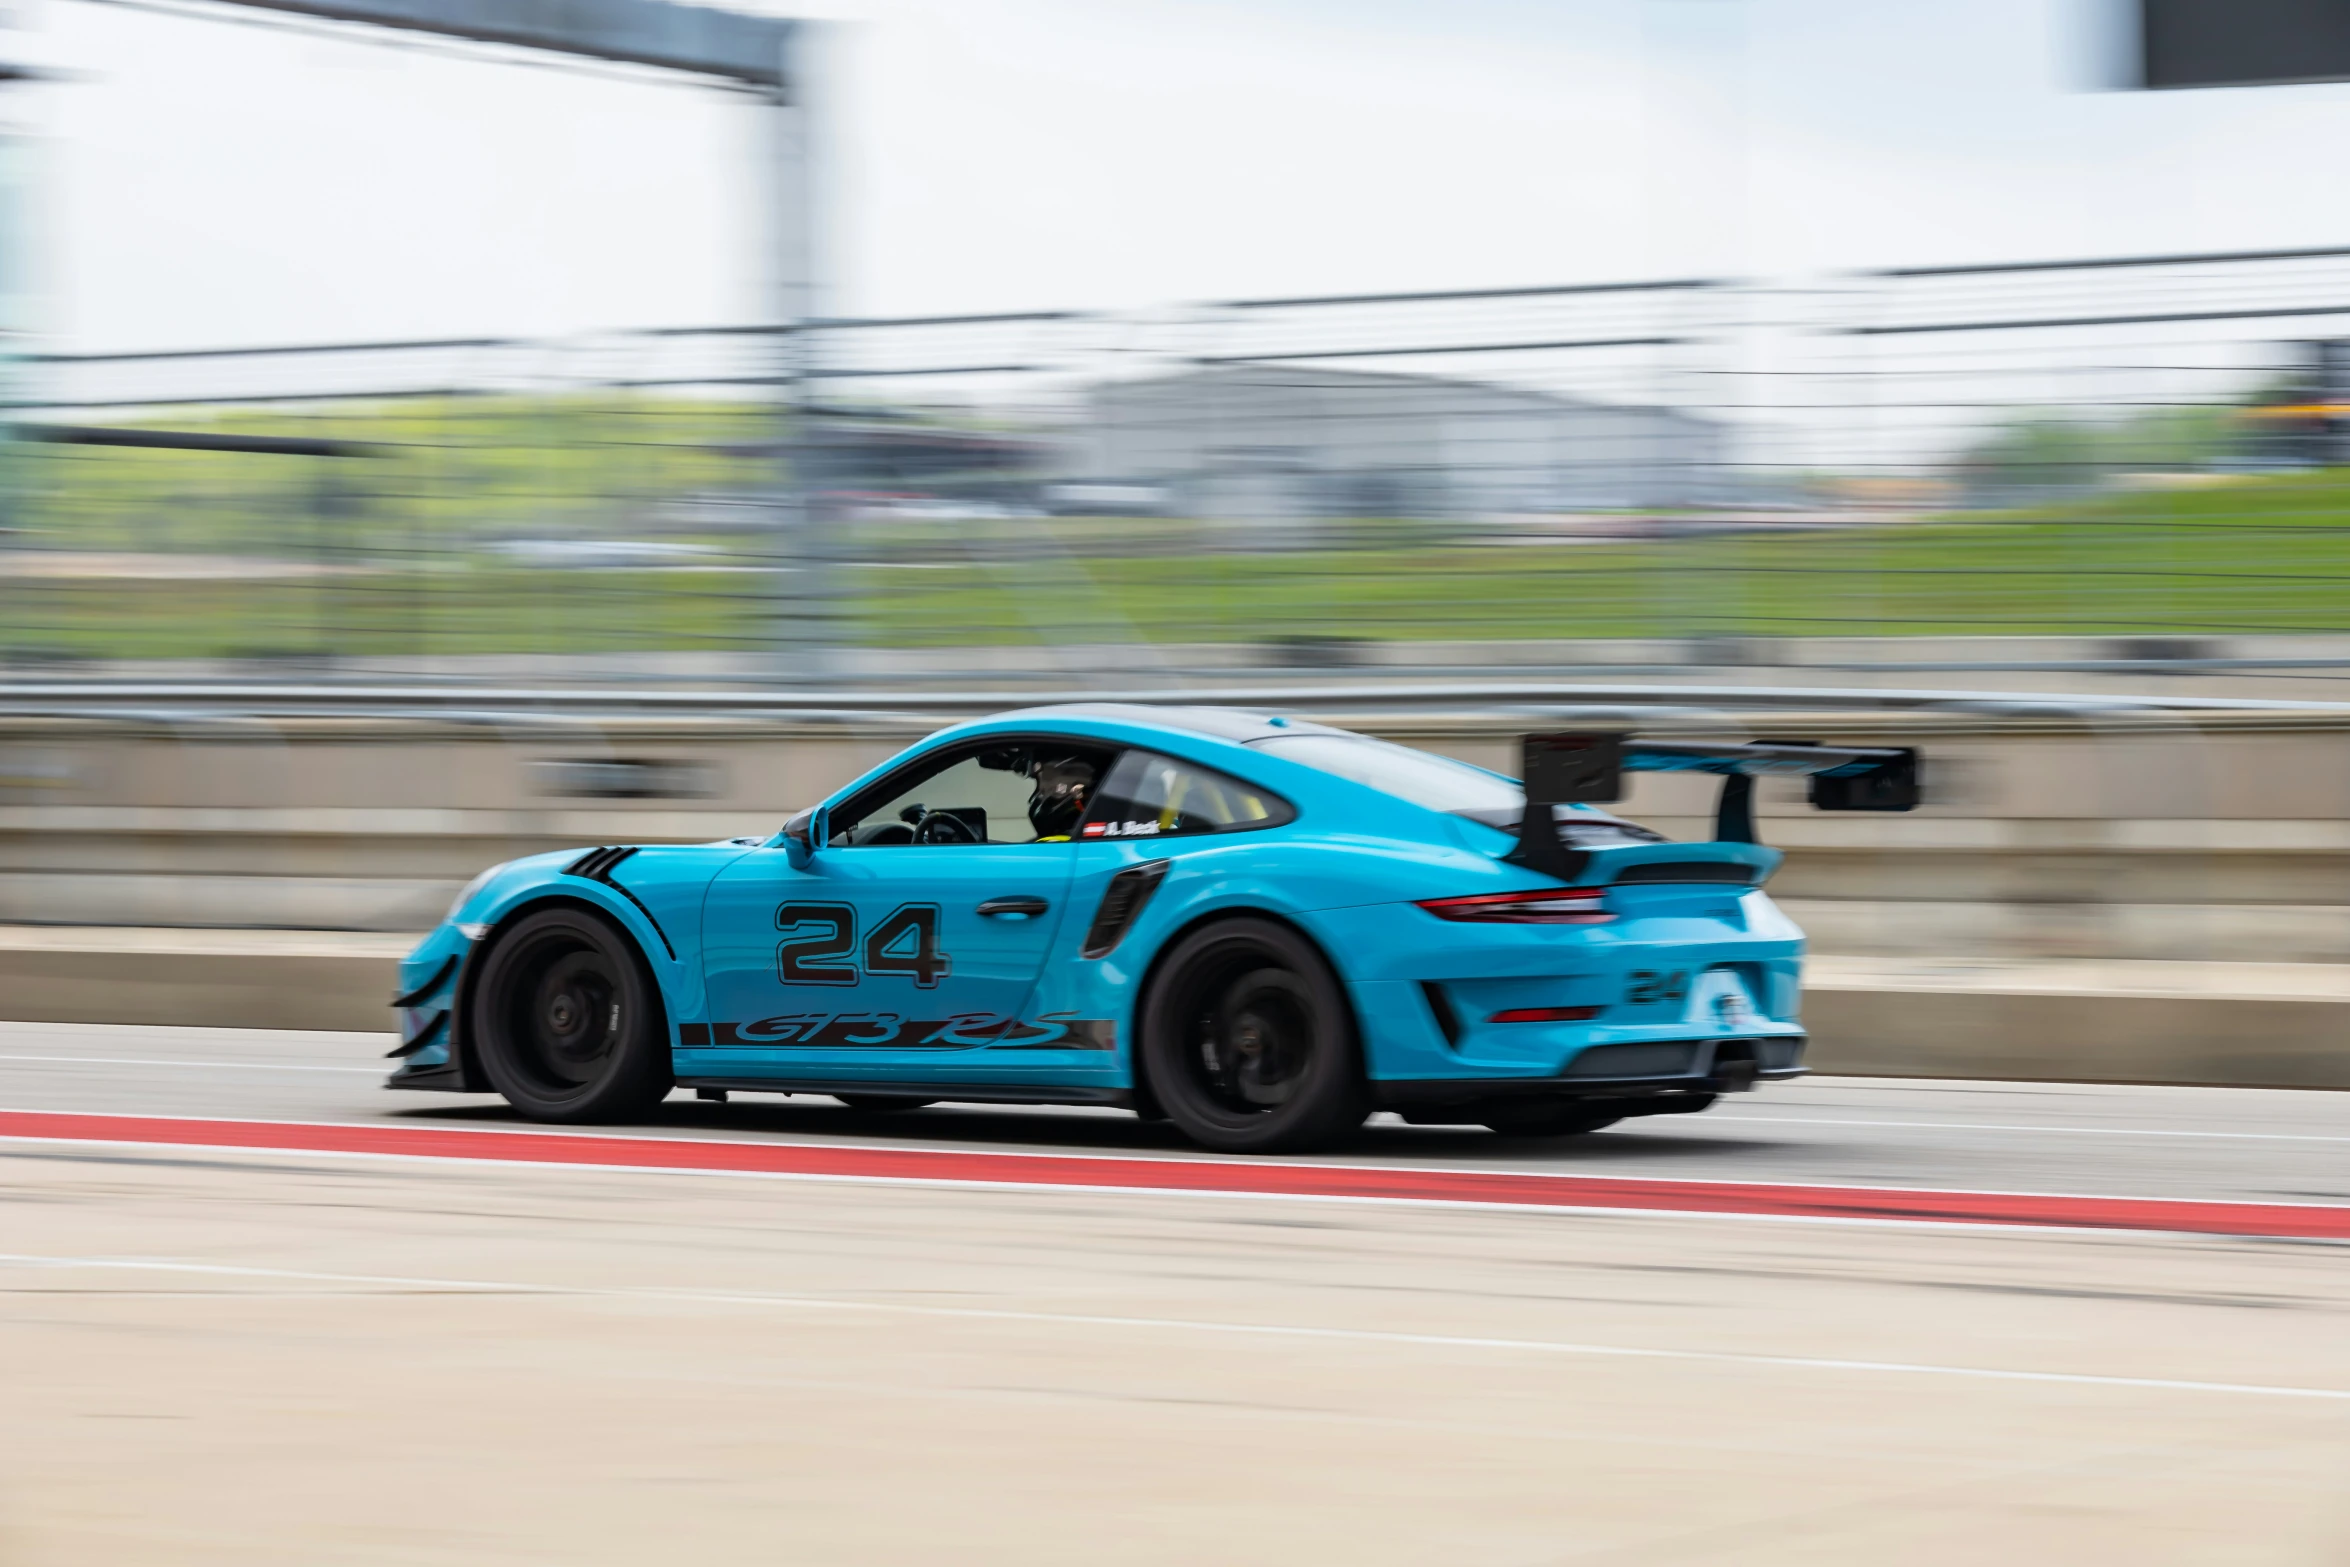 a blue racing car going around a corner